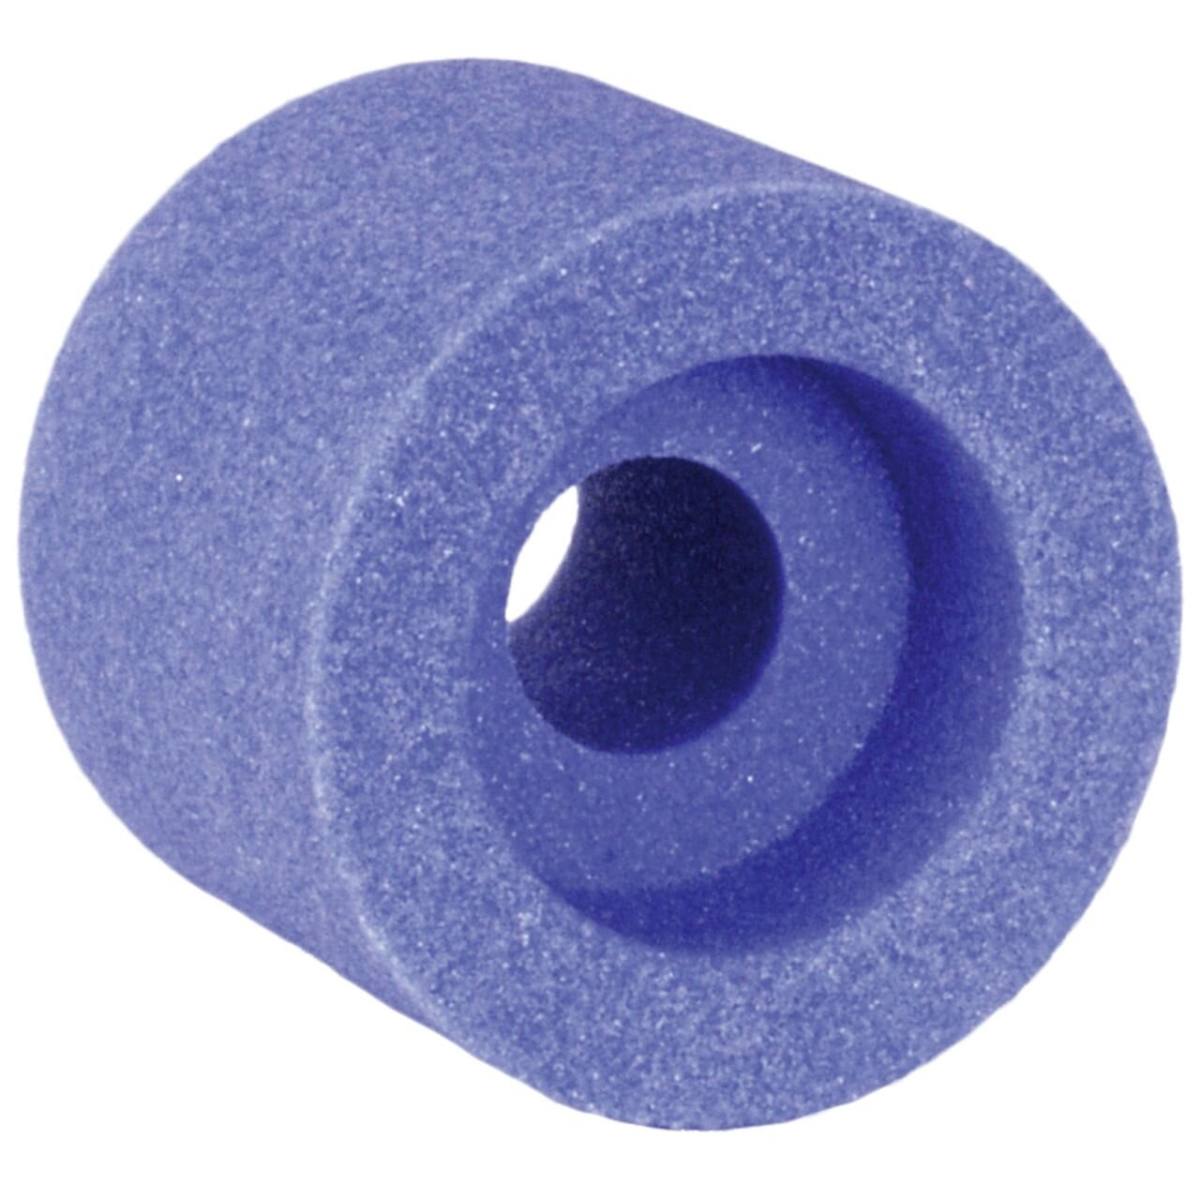 Tyrolit rettifica cilindrica interna in ceramica convenzionale DxDxH 50x50x16 Per acciai alti legati e HSS, forma: 5, Art. 664767